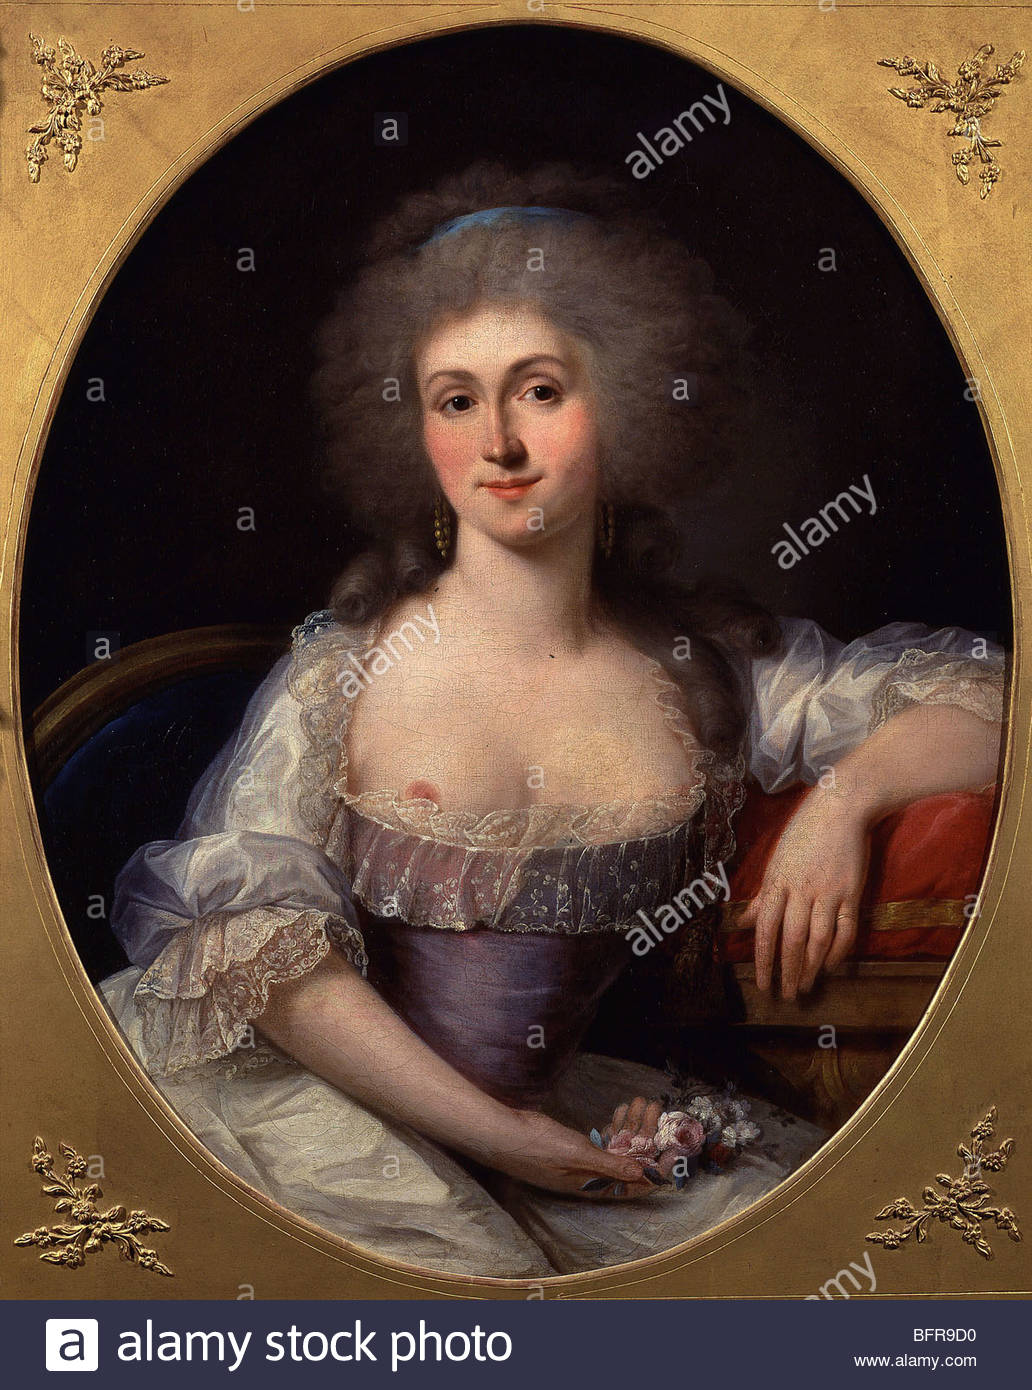 Marie-Therese-Louise-di-Savoia-Carignano